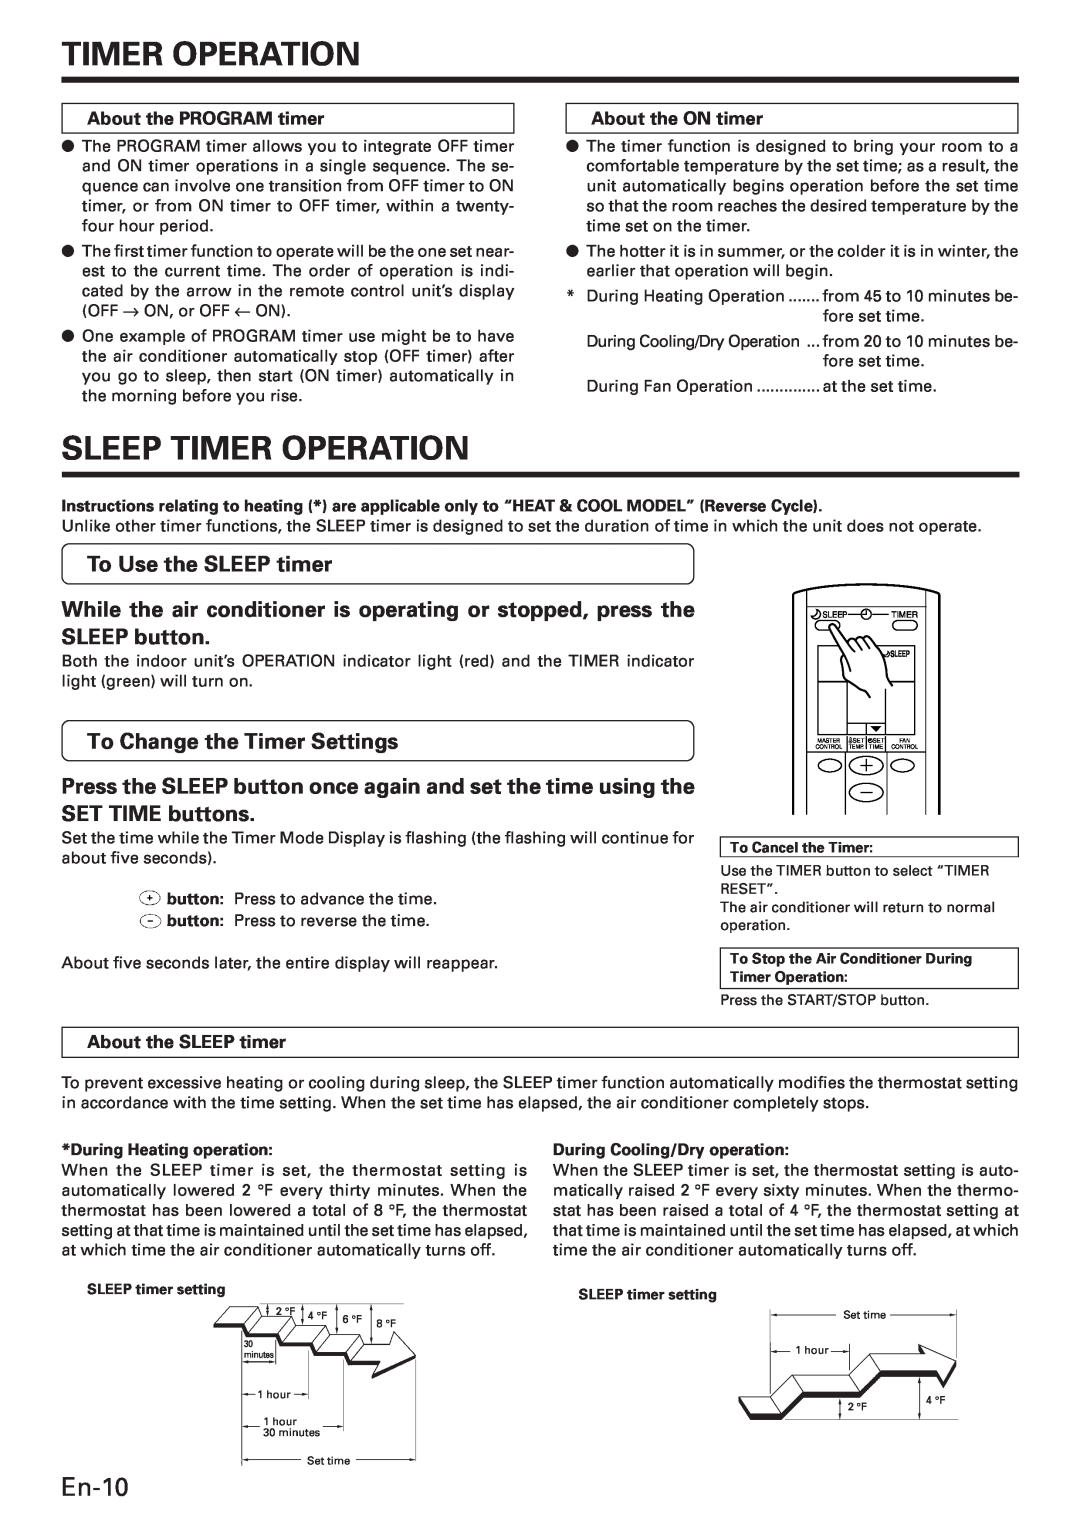 Fujitsu ABU30 Sleep Timer Operation, En-10, To Use the SLEEP timer, To Change the Timer Settings, During Heating operation 